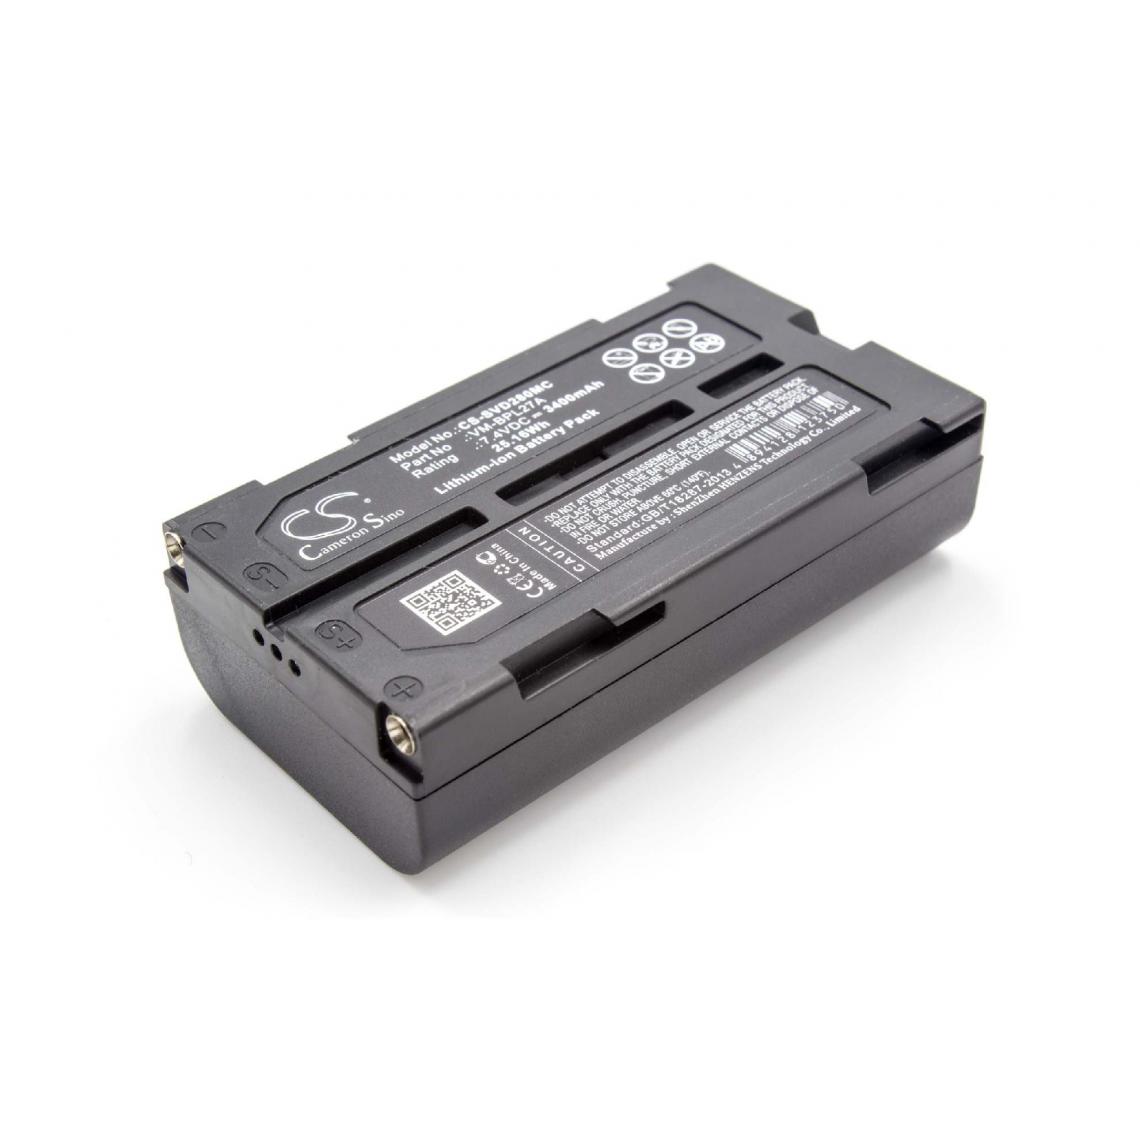 Vhbw - vhbw Batterie compatible avec Sokkia SET230RK3, SET2 30RK3, SET 230RK3, SET250RX, SET300, SET 300 outil de mesure (3400mAh, 7,4V, Li-ion) - Piles rechargeables